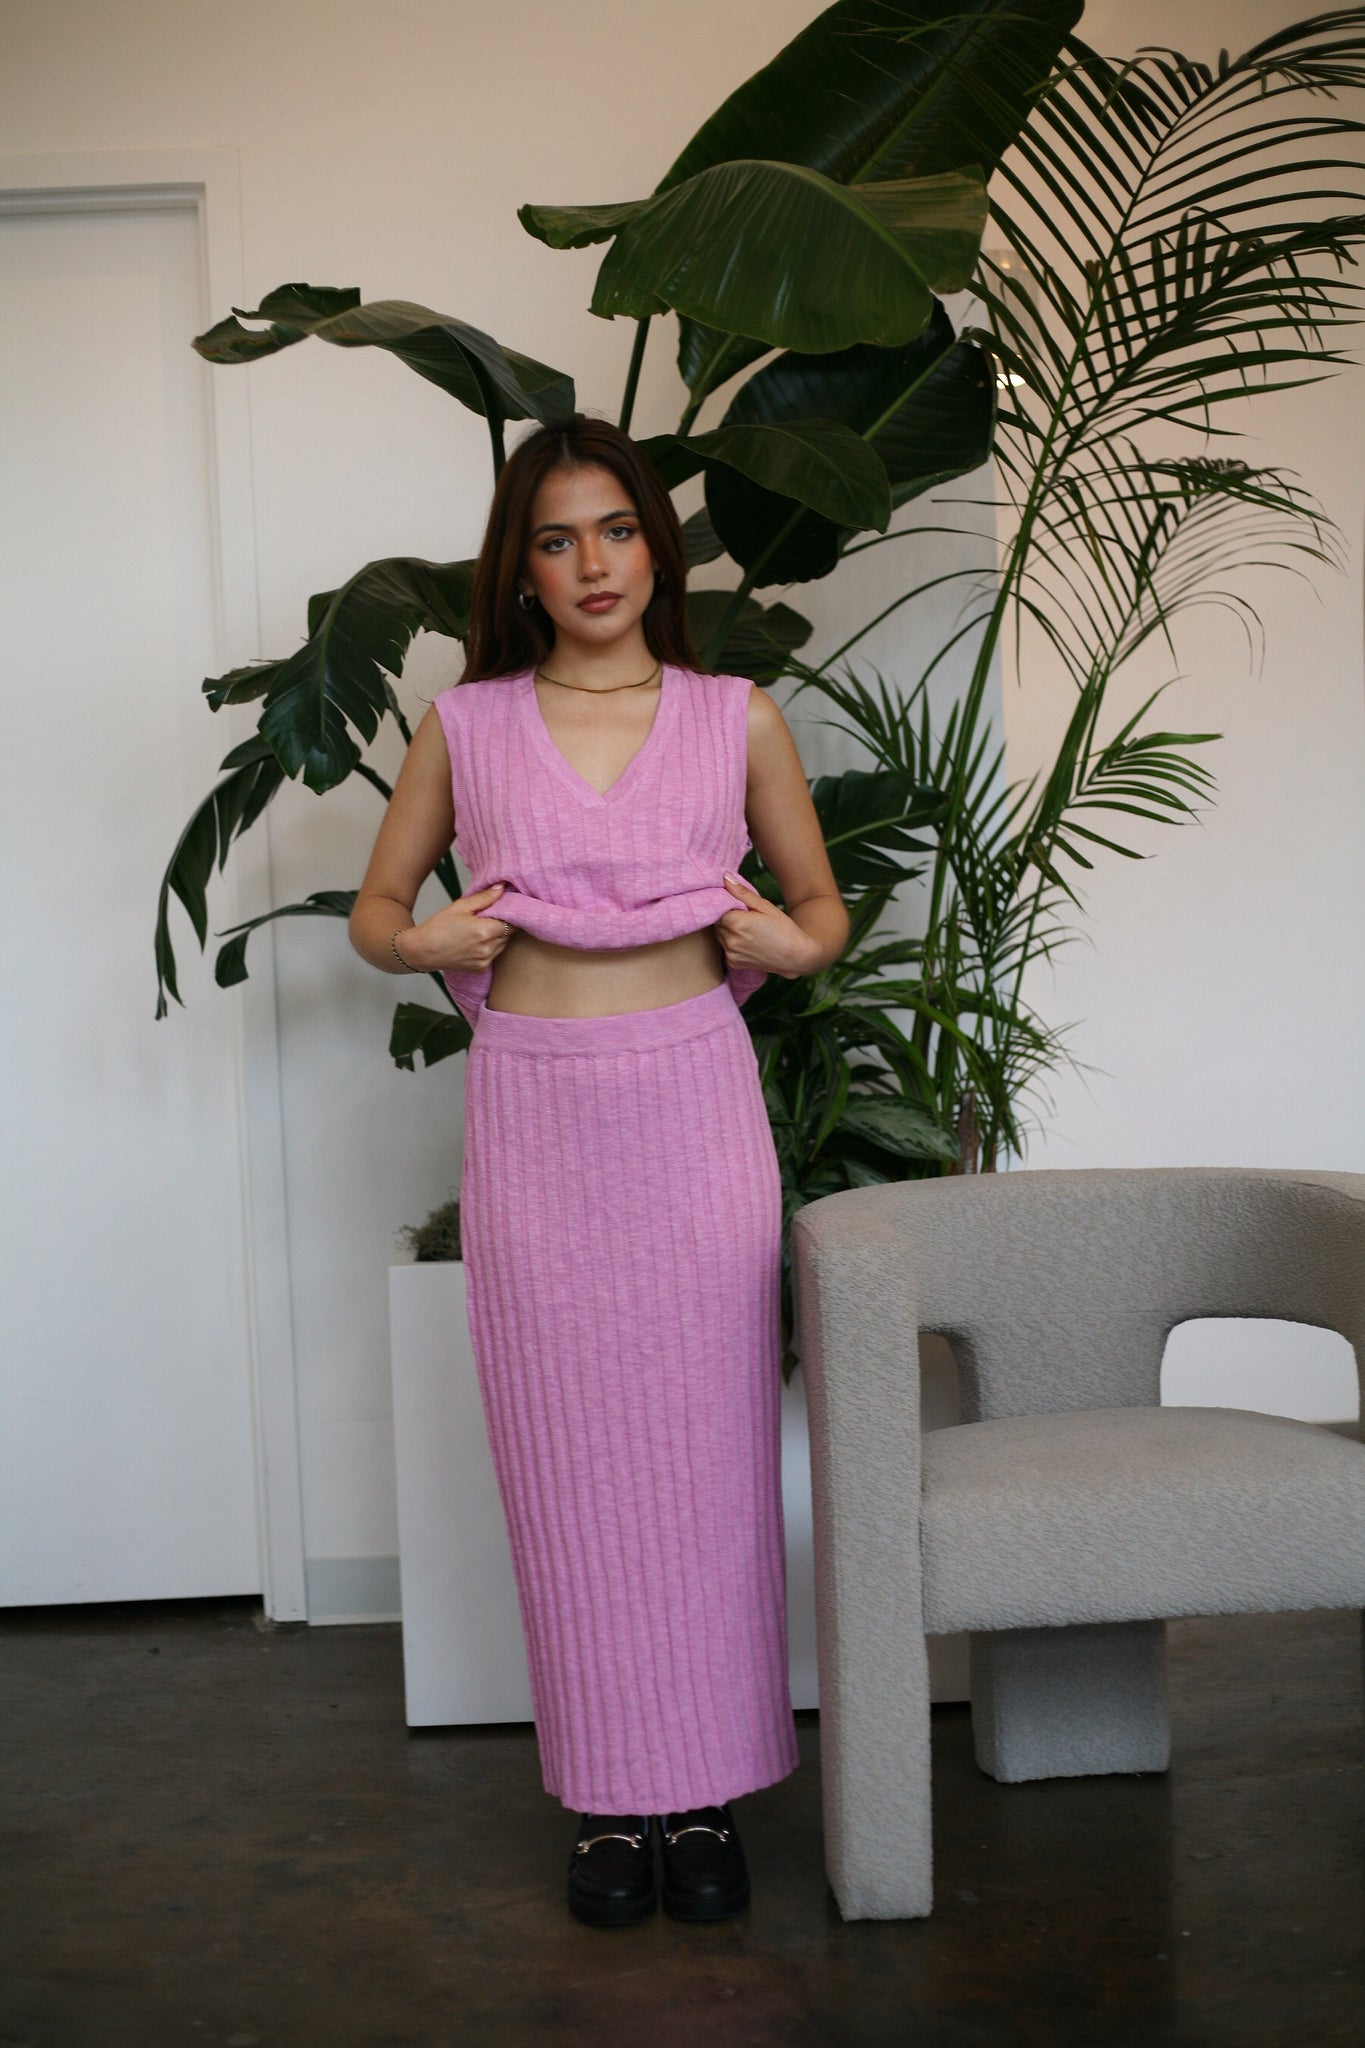 Woman standing wearing pink knit clothing set